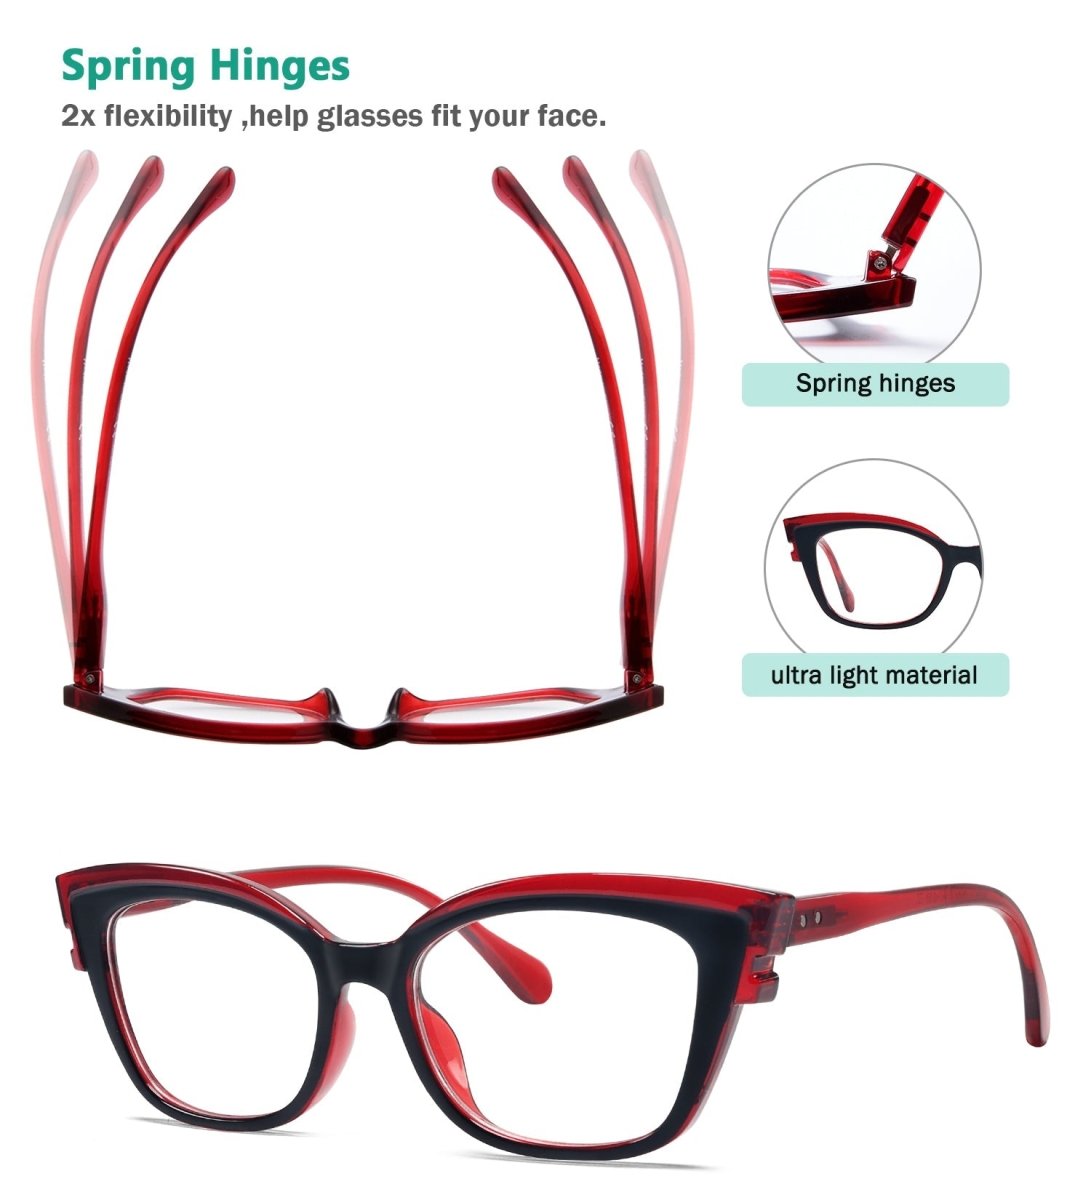 5 Pack Cat-eye Reading Glasses Stylish Readers R2127